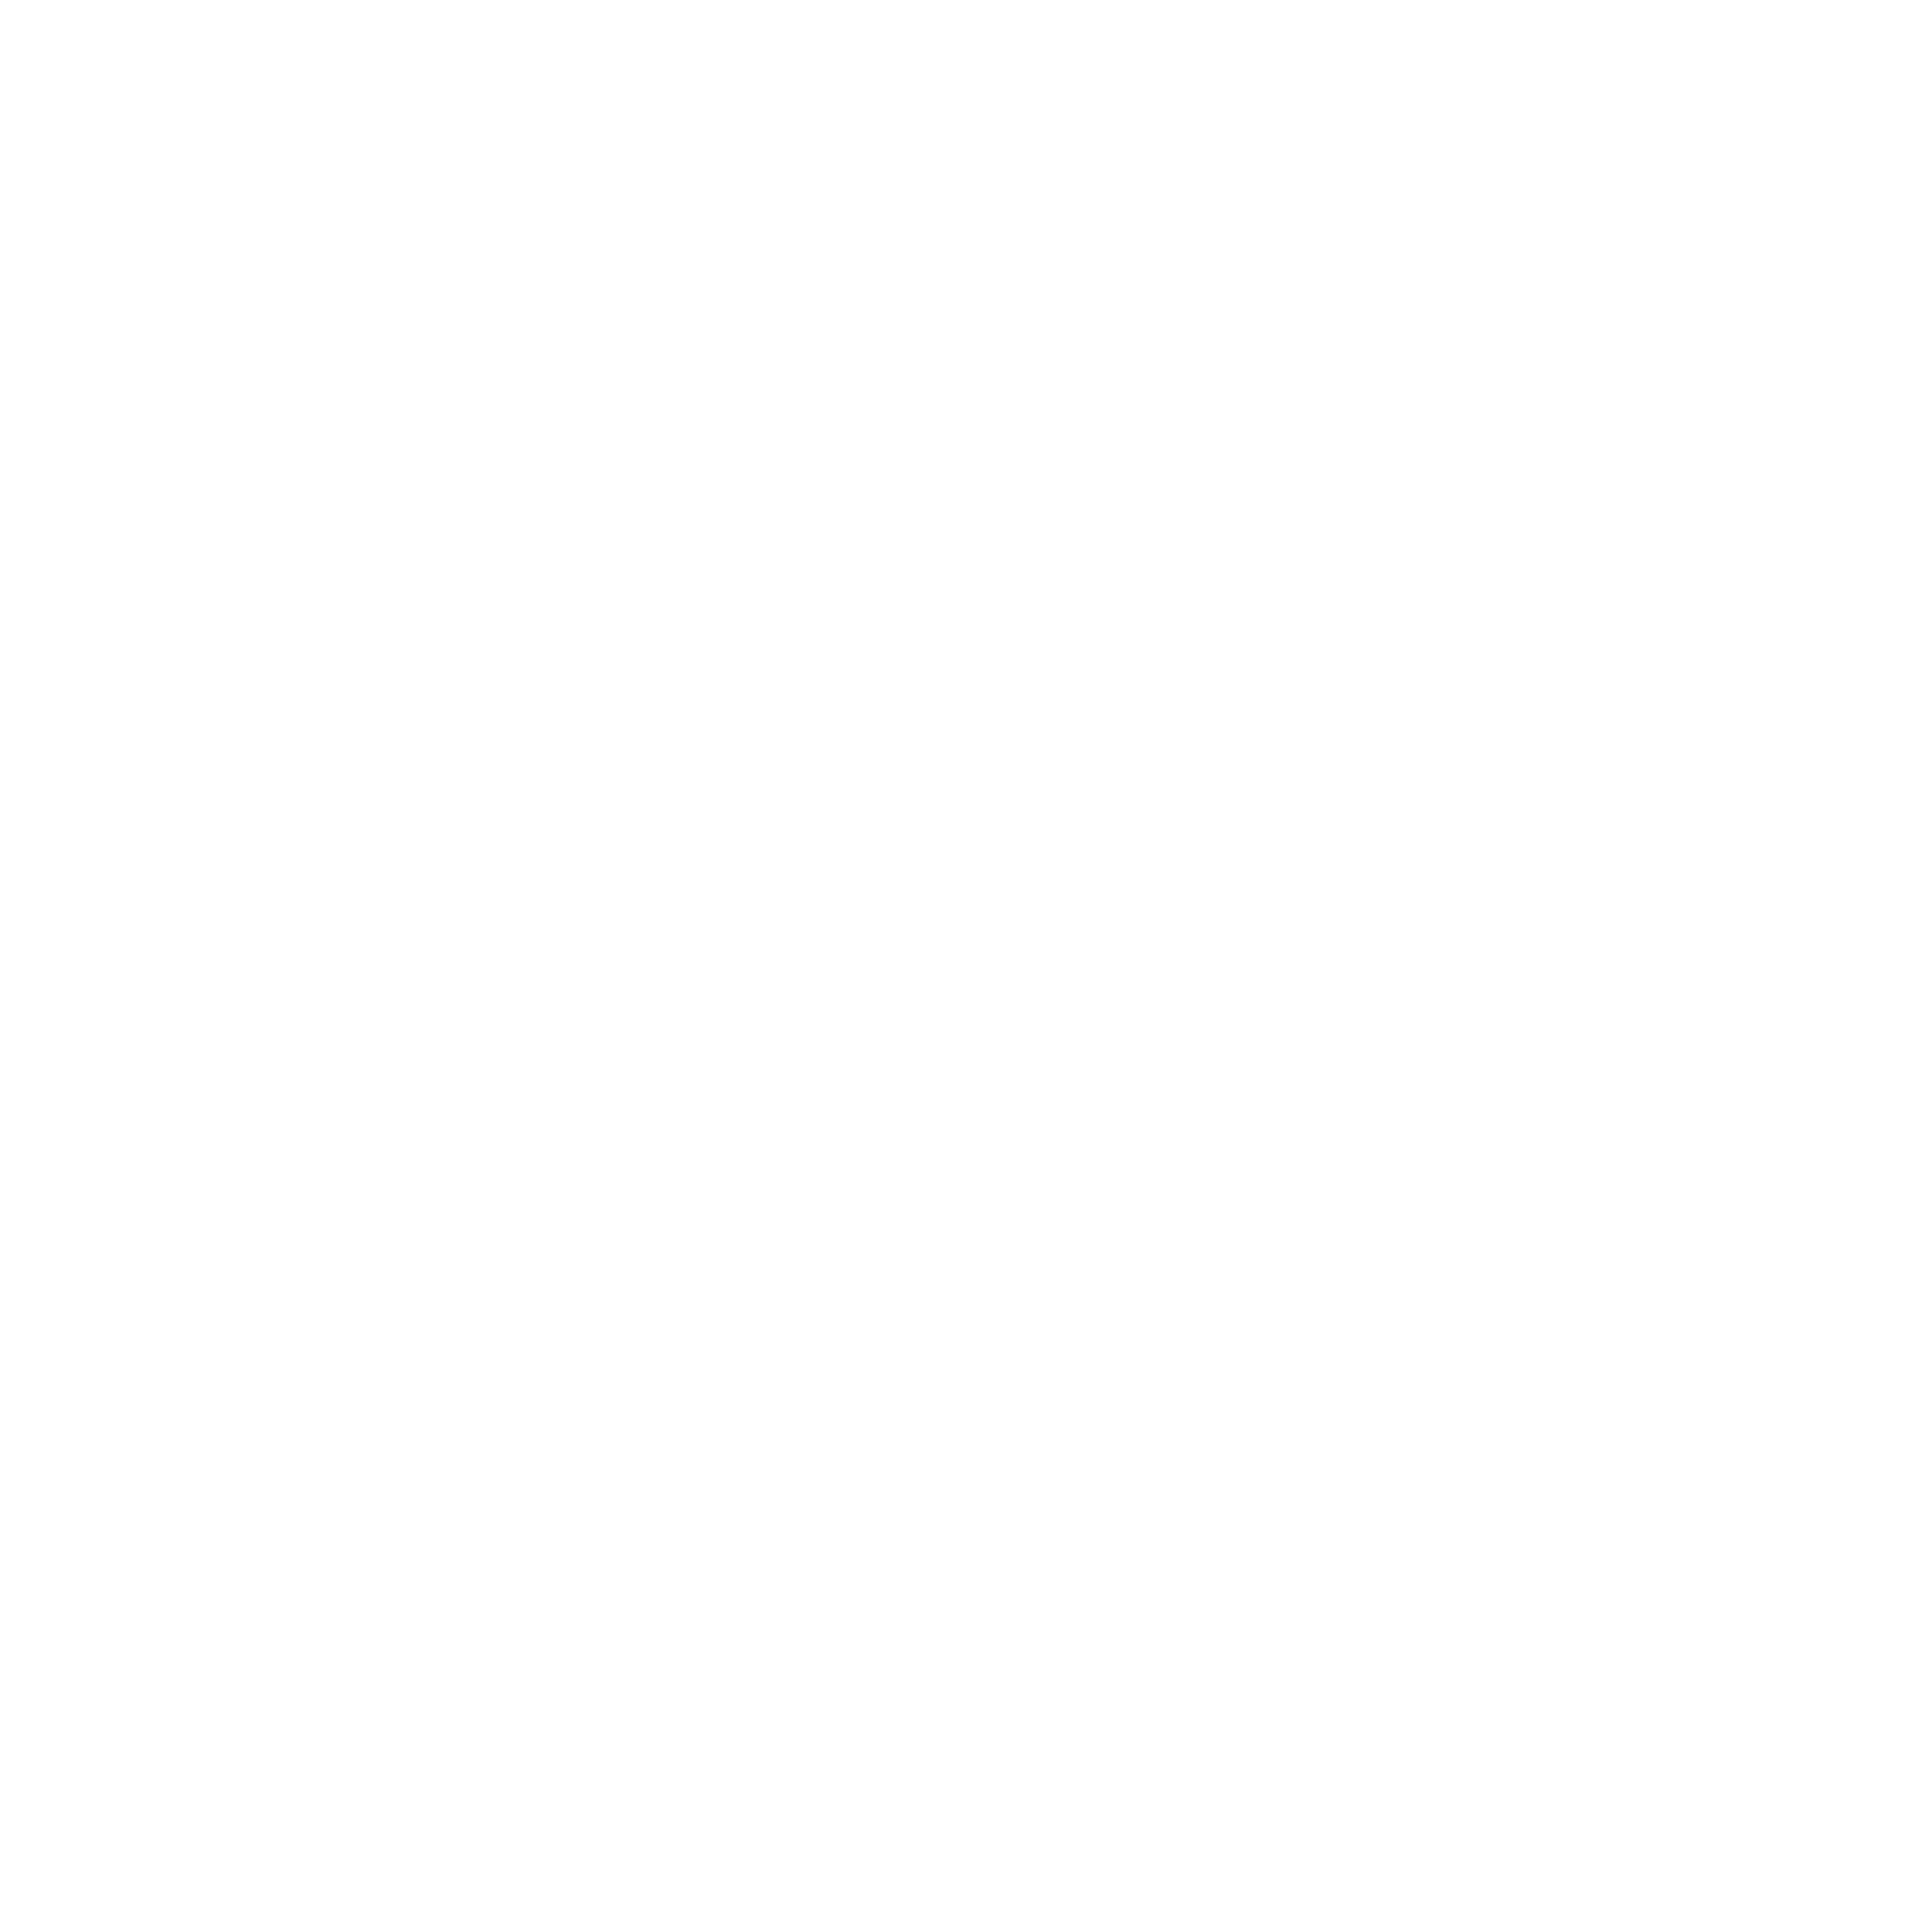 Brown White Logo - Millward Brown Logo PNG Transparent & SVG Vector - Freebie Supply